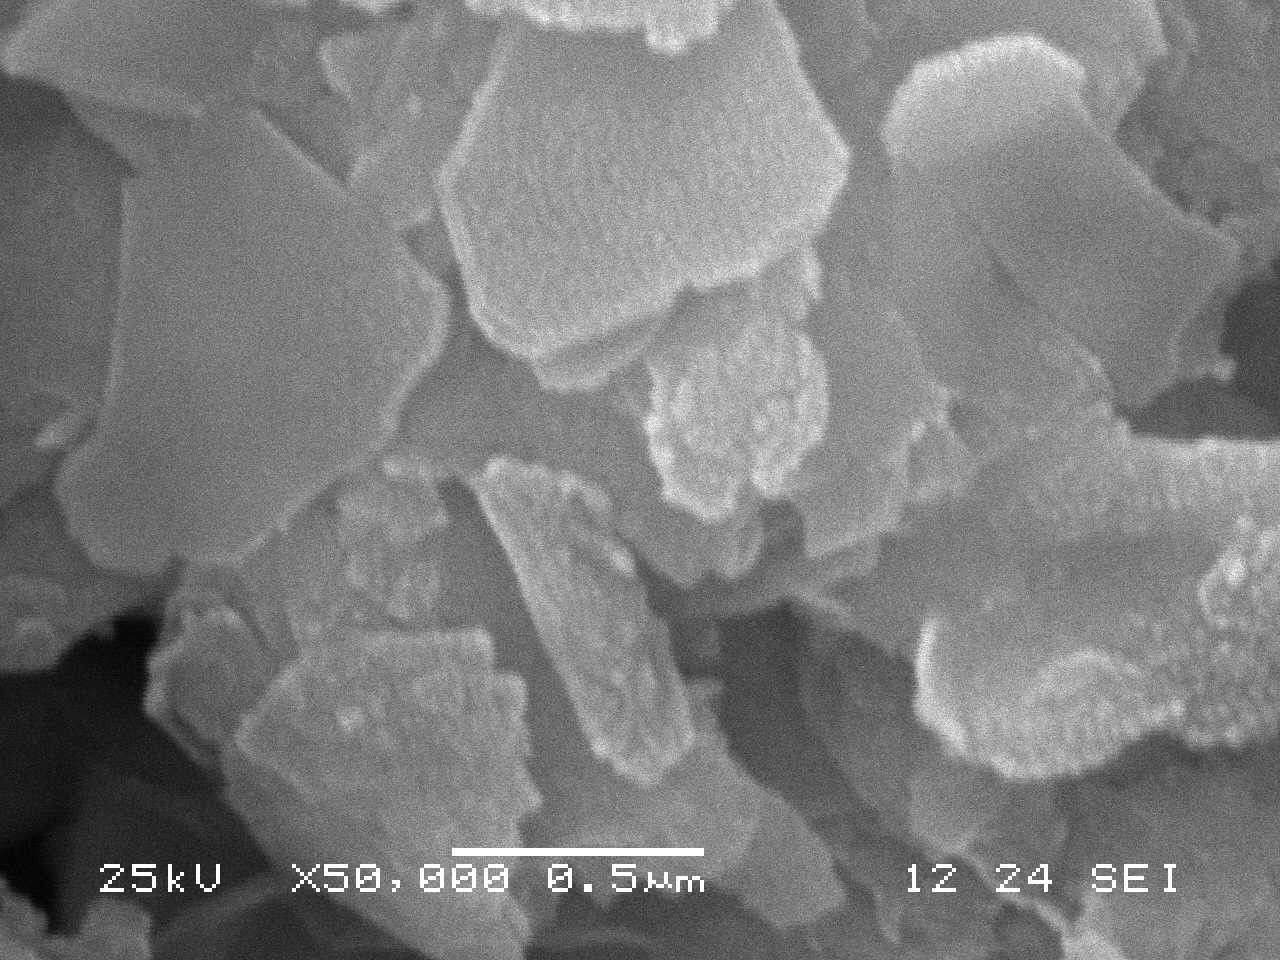 Tungsten Disulfide (WS2) Powder, 0.6 micron